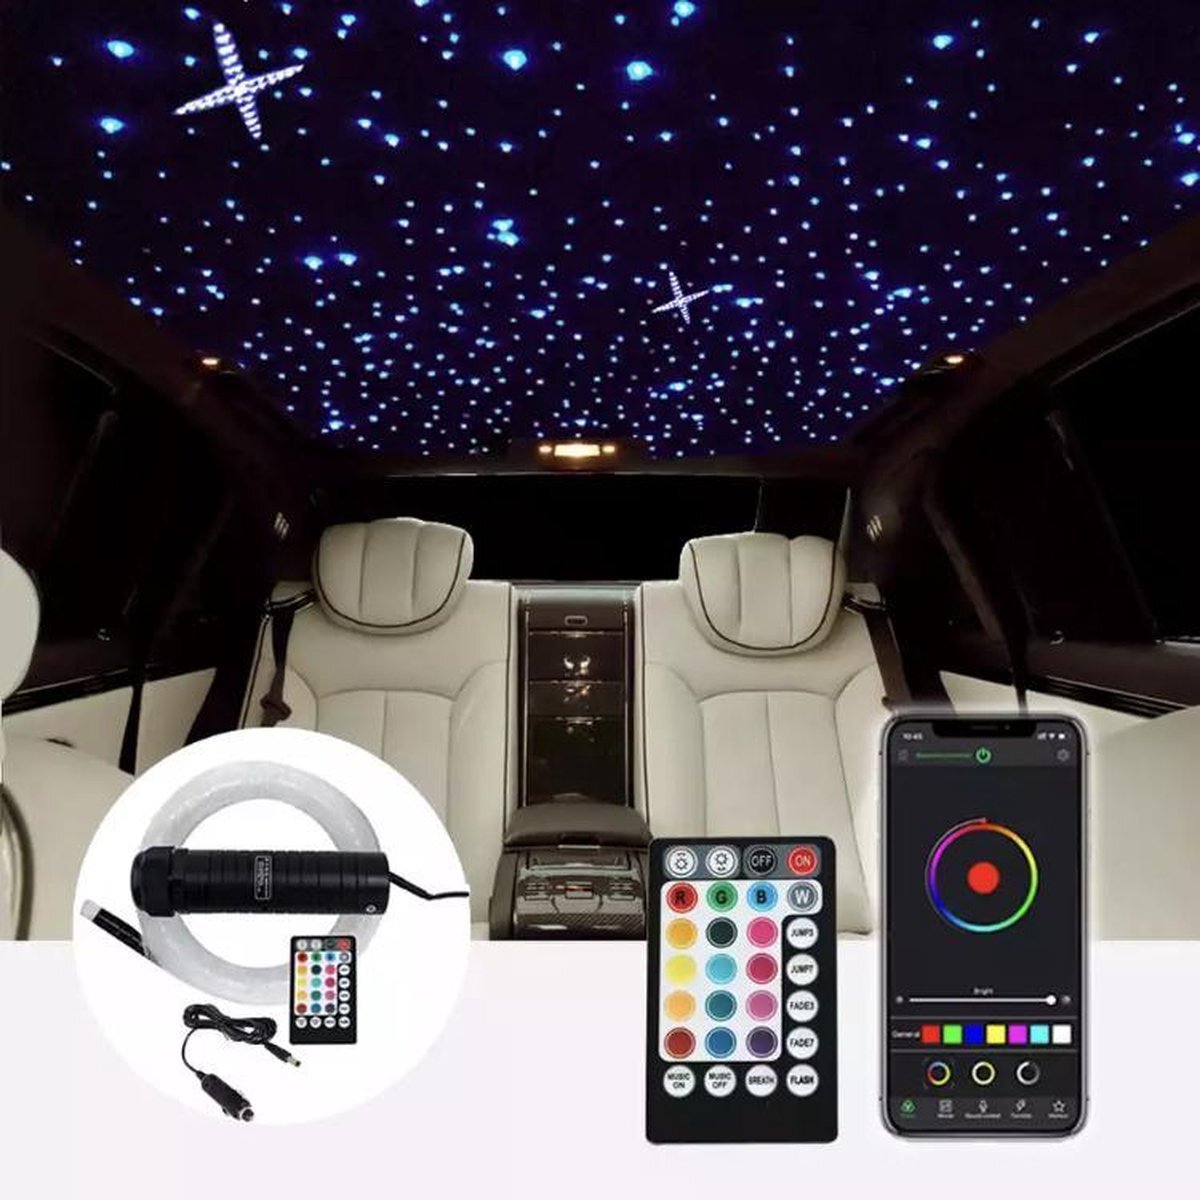 S&L sterrenhemel plafond set licht hemel auto dak mix kleur 380pcs 2m glasvezel met RF controle IOS/Android controle 12V 6W RGB